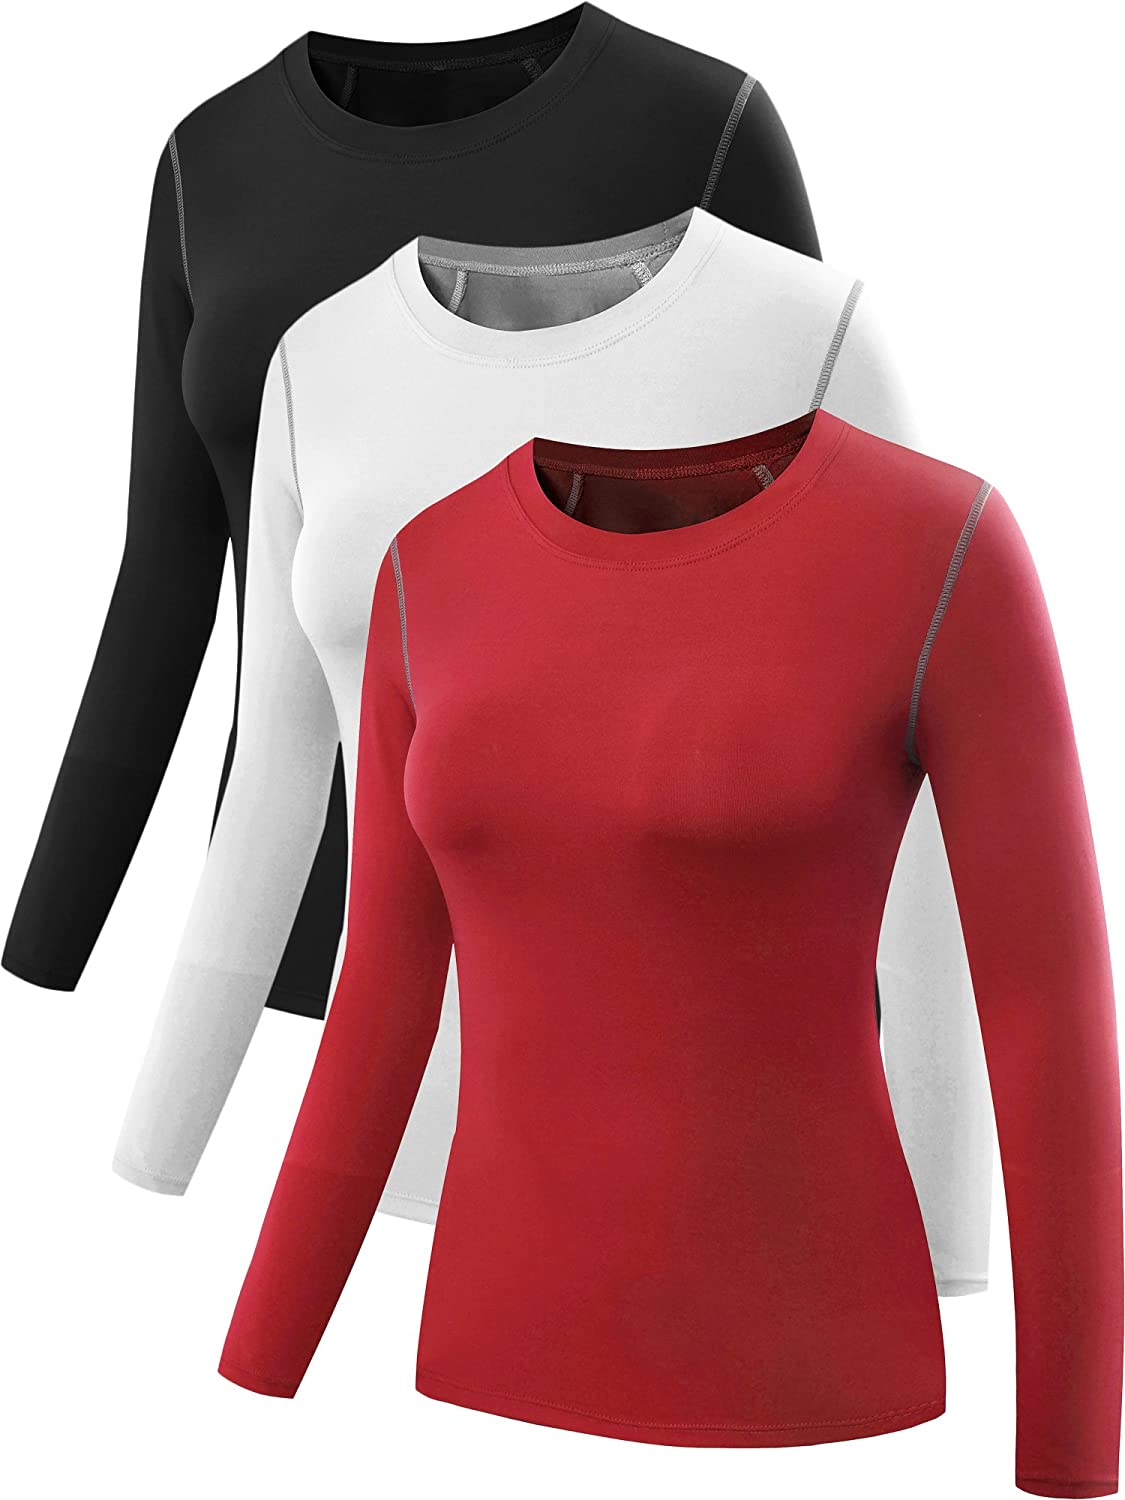 Neleus Women's 3 Pack Compression Shirts Long Sleeve Yoga Athletic